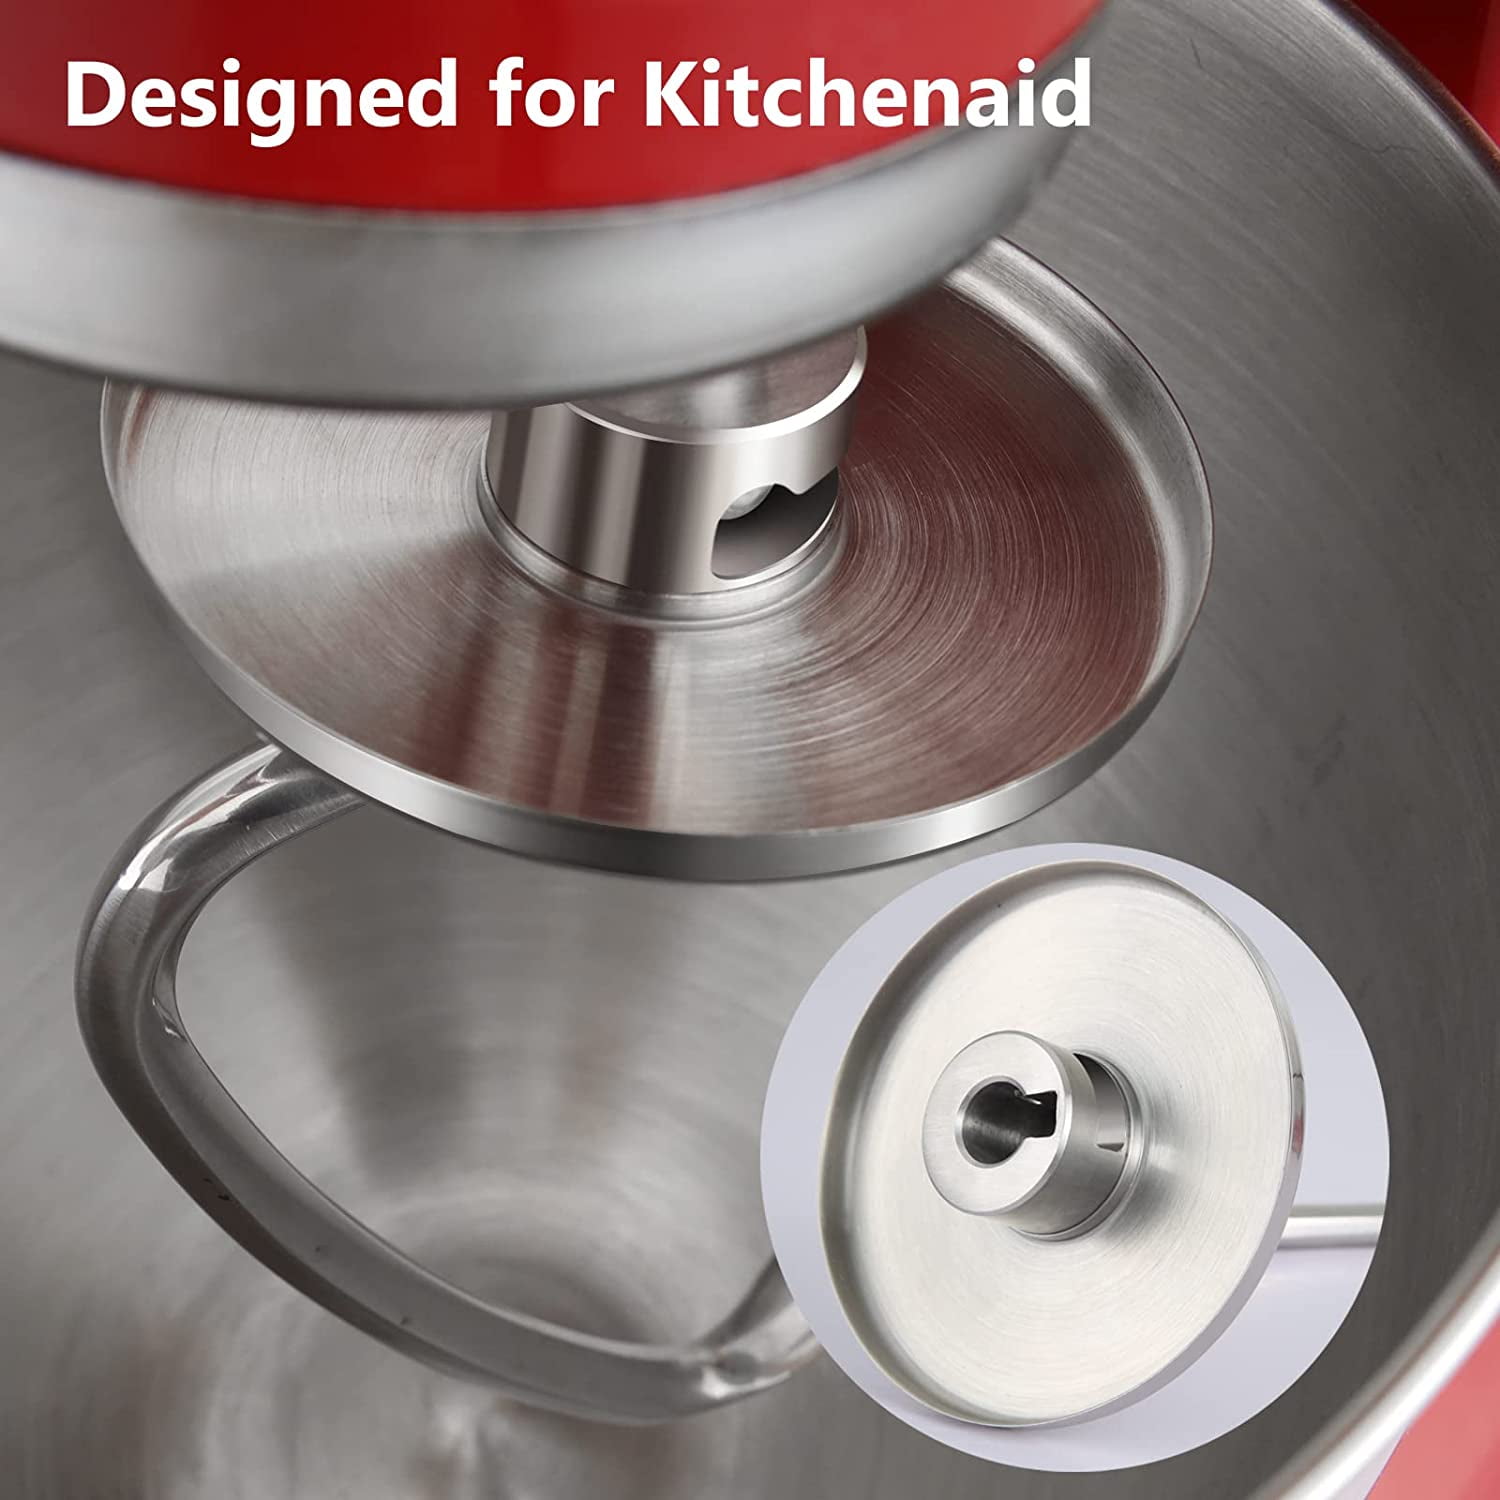 LETOMS Paddle Attachment for Kitchenaid Stand Mixers 4.5-5 Quart, Flex Edge  Beater for Kitchenaid Mixer, Dishwasher Safe